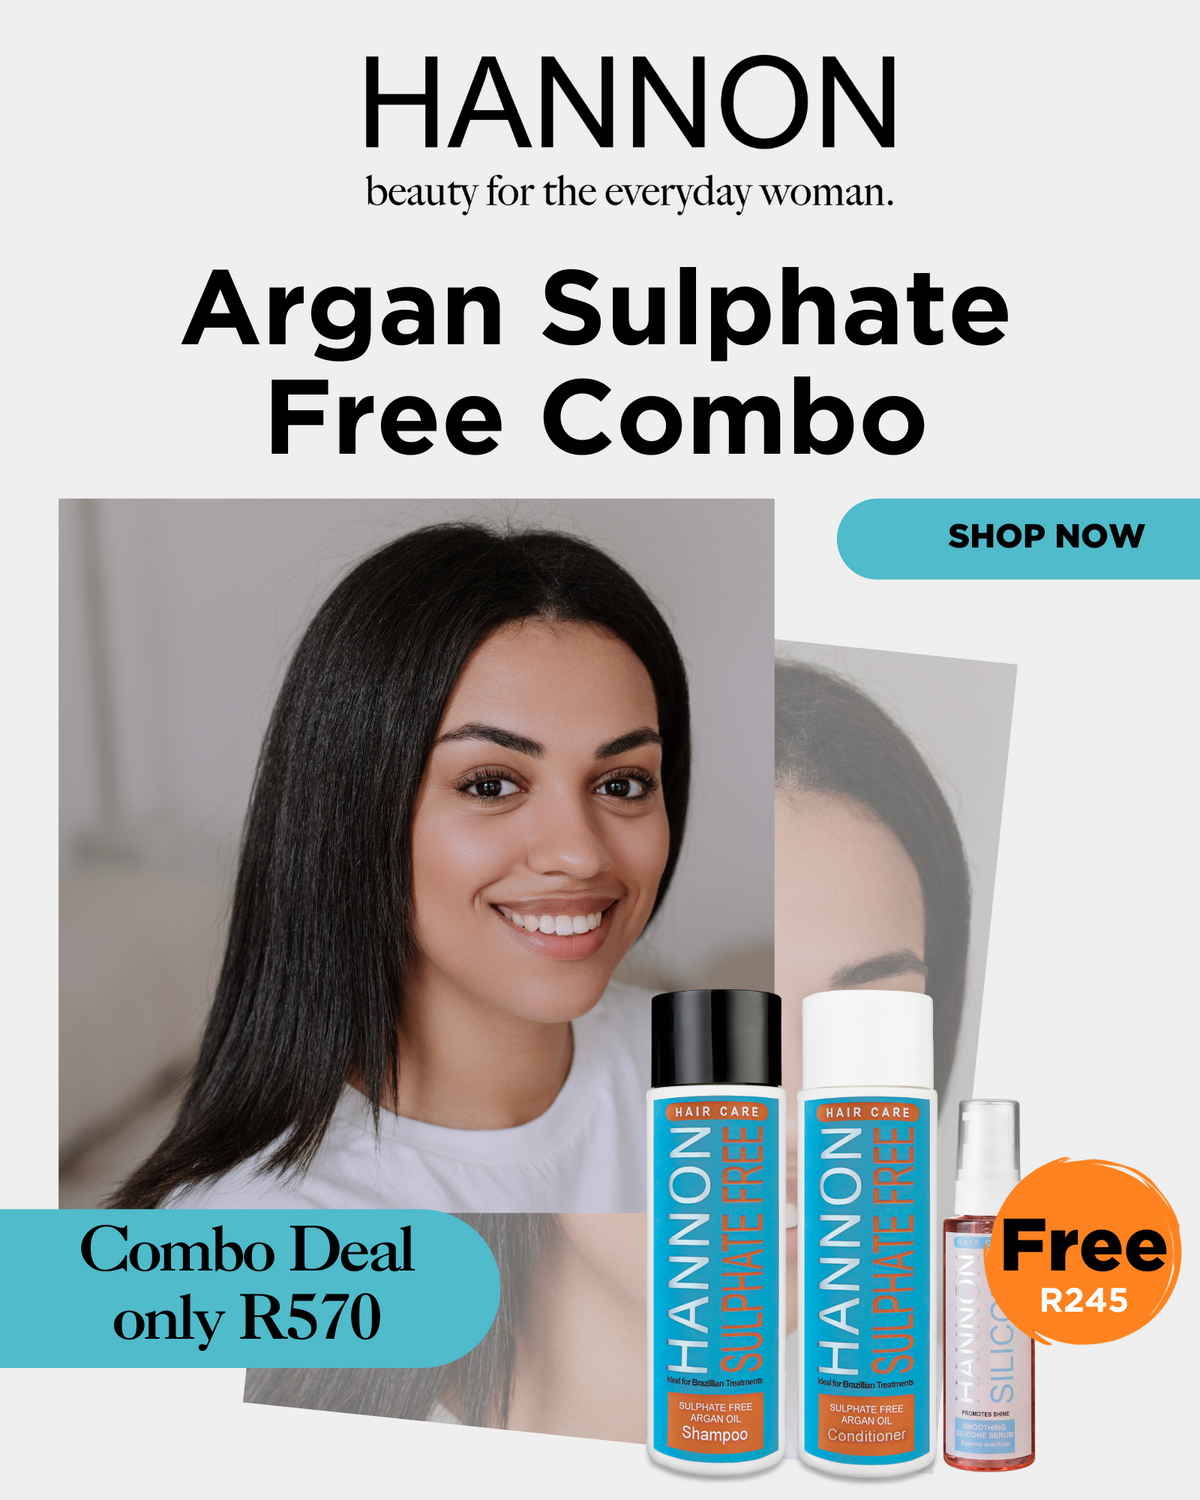 Argan Sulphate Free Combo